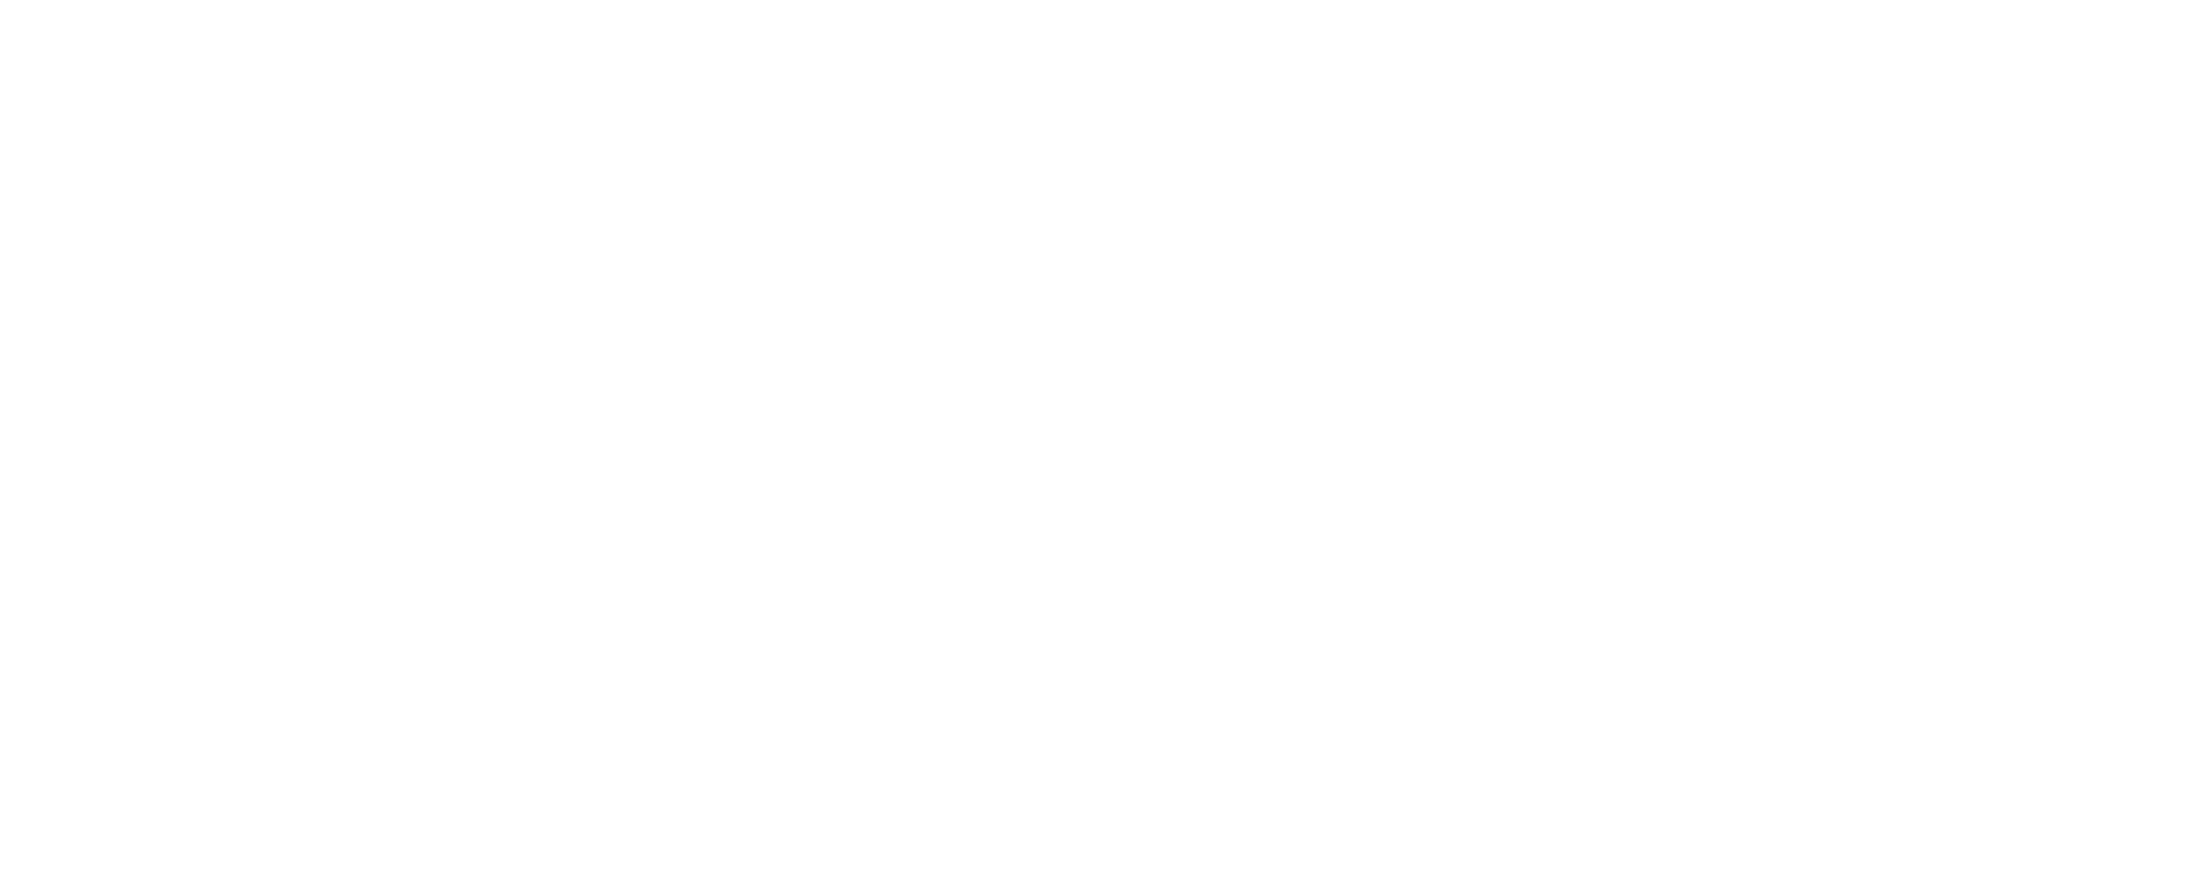 The Leonardo Group